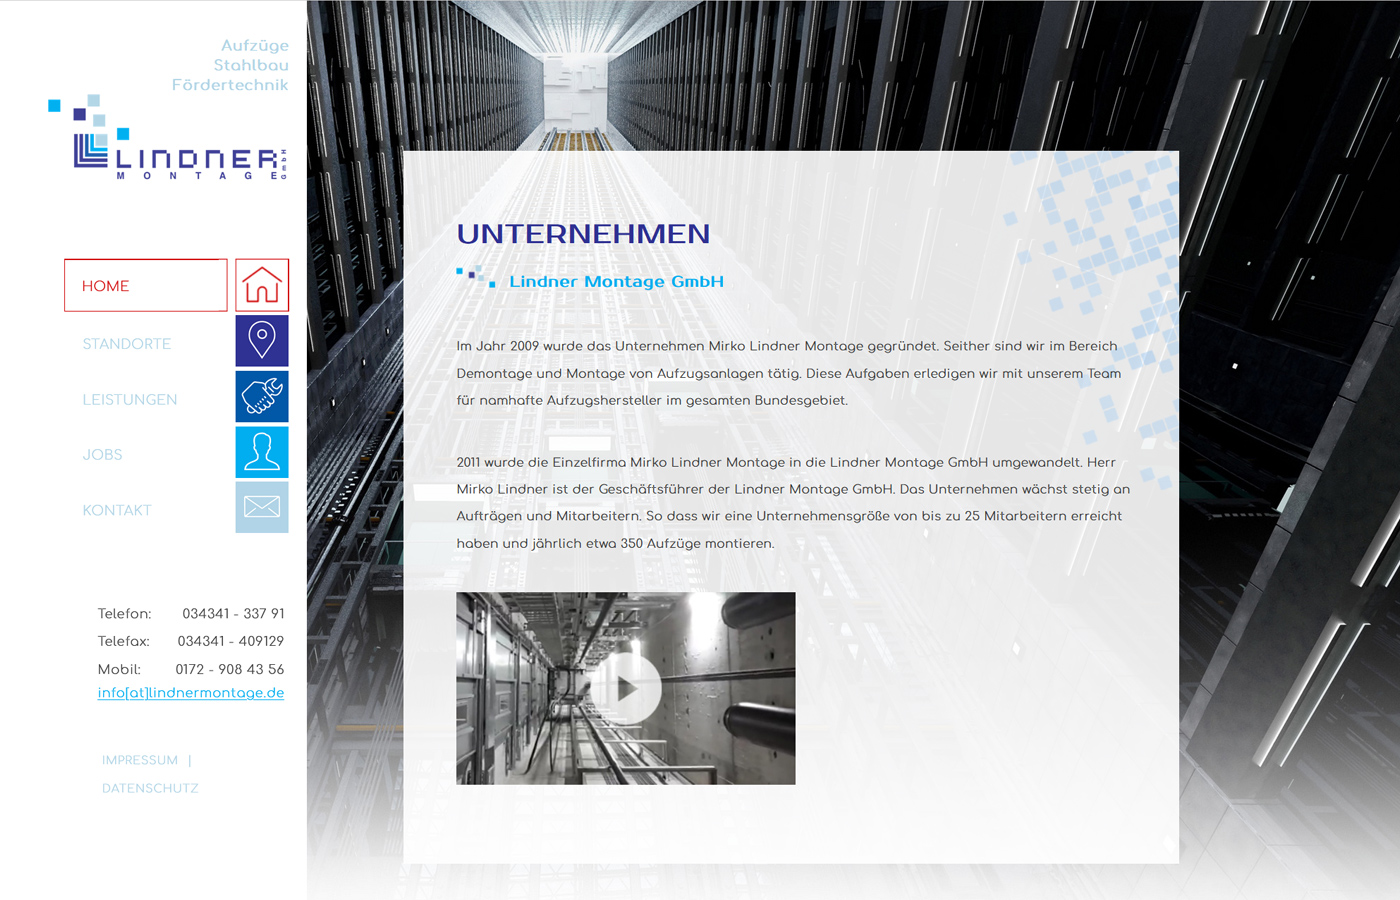 Lindner Montage GmbH